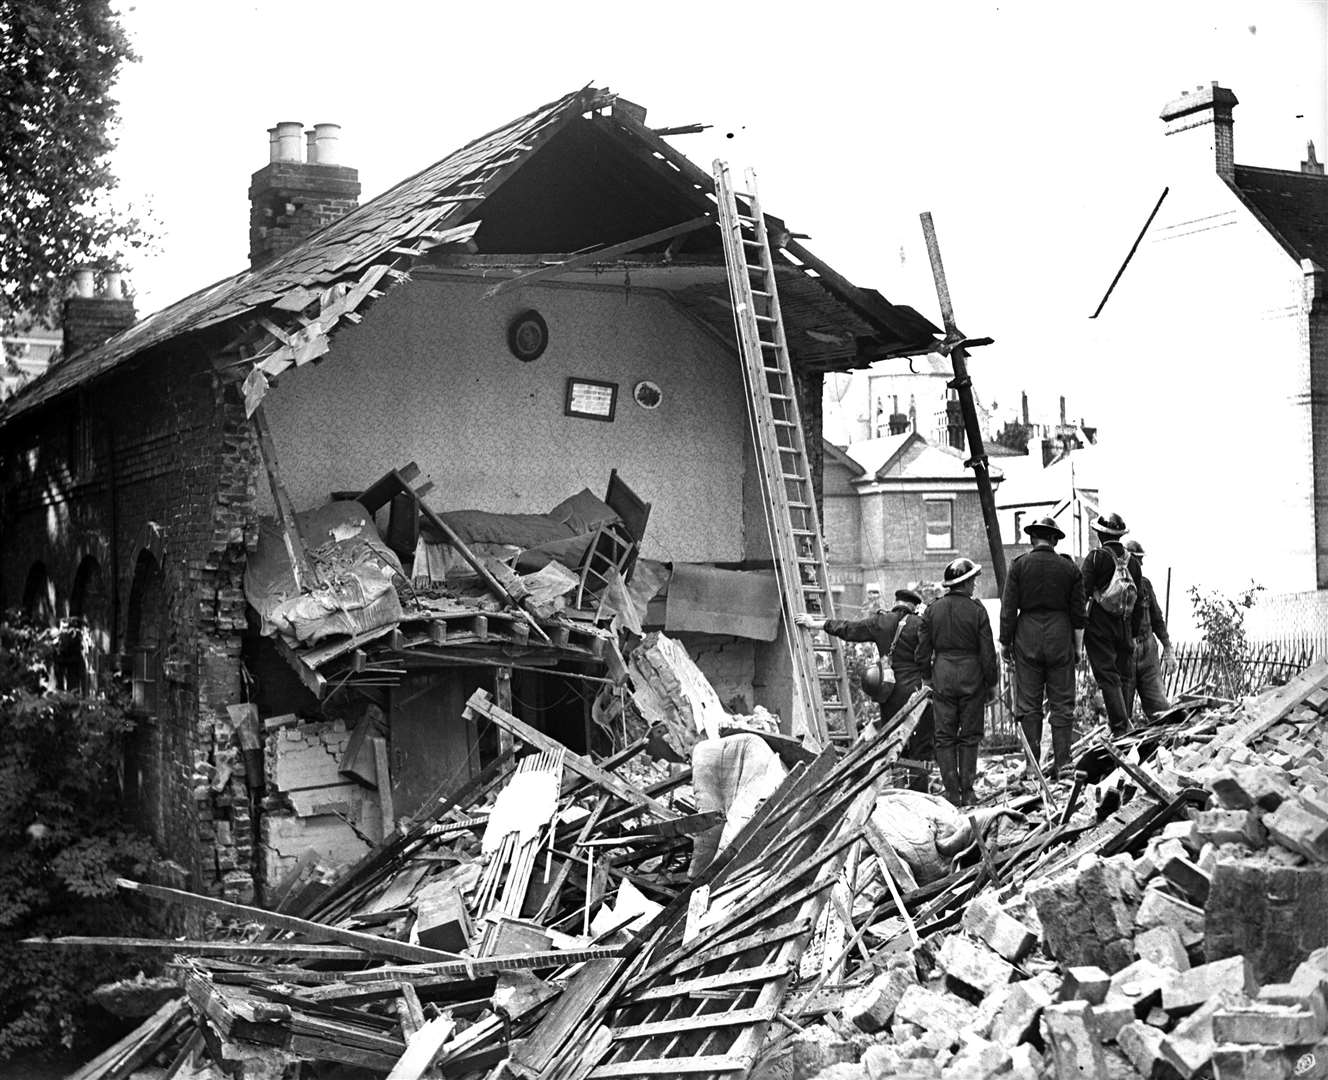 Bomb damage Paradise Row, Maidstone, in 1940